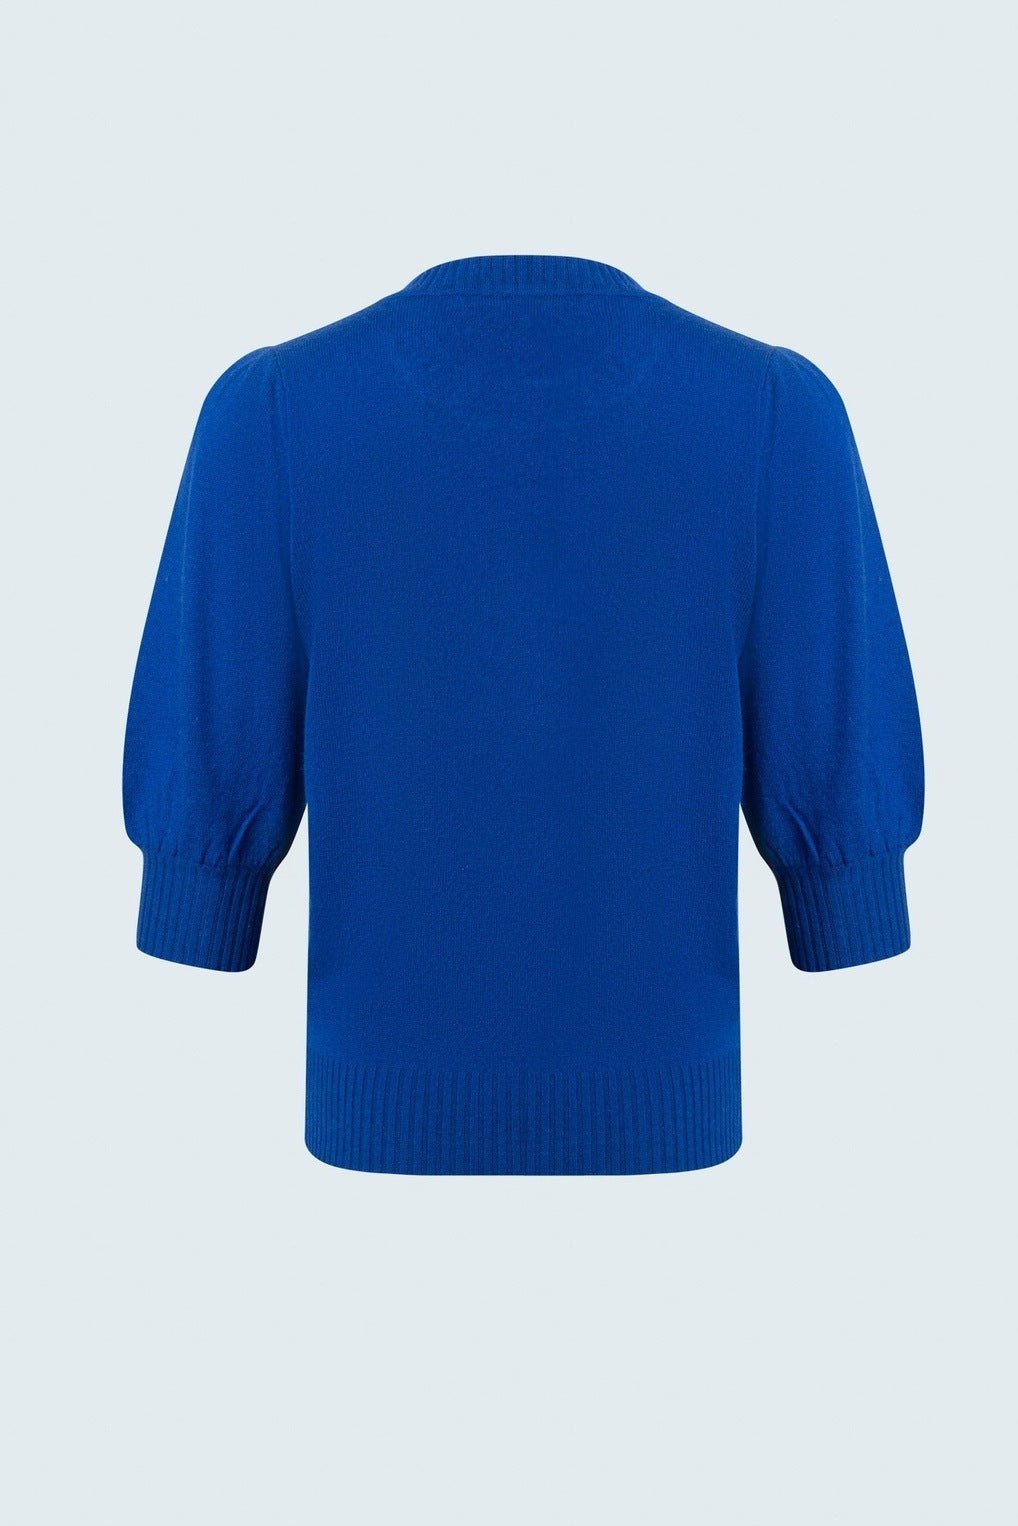 Iris Setlakwe Mock Neck 3/4 Sleeve Sweater